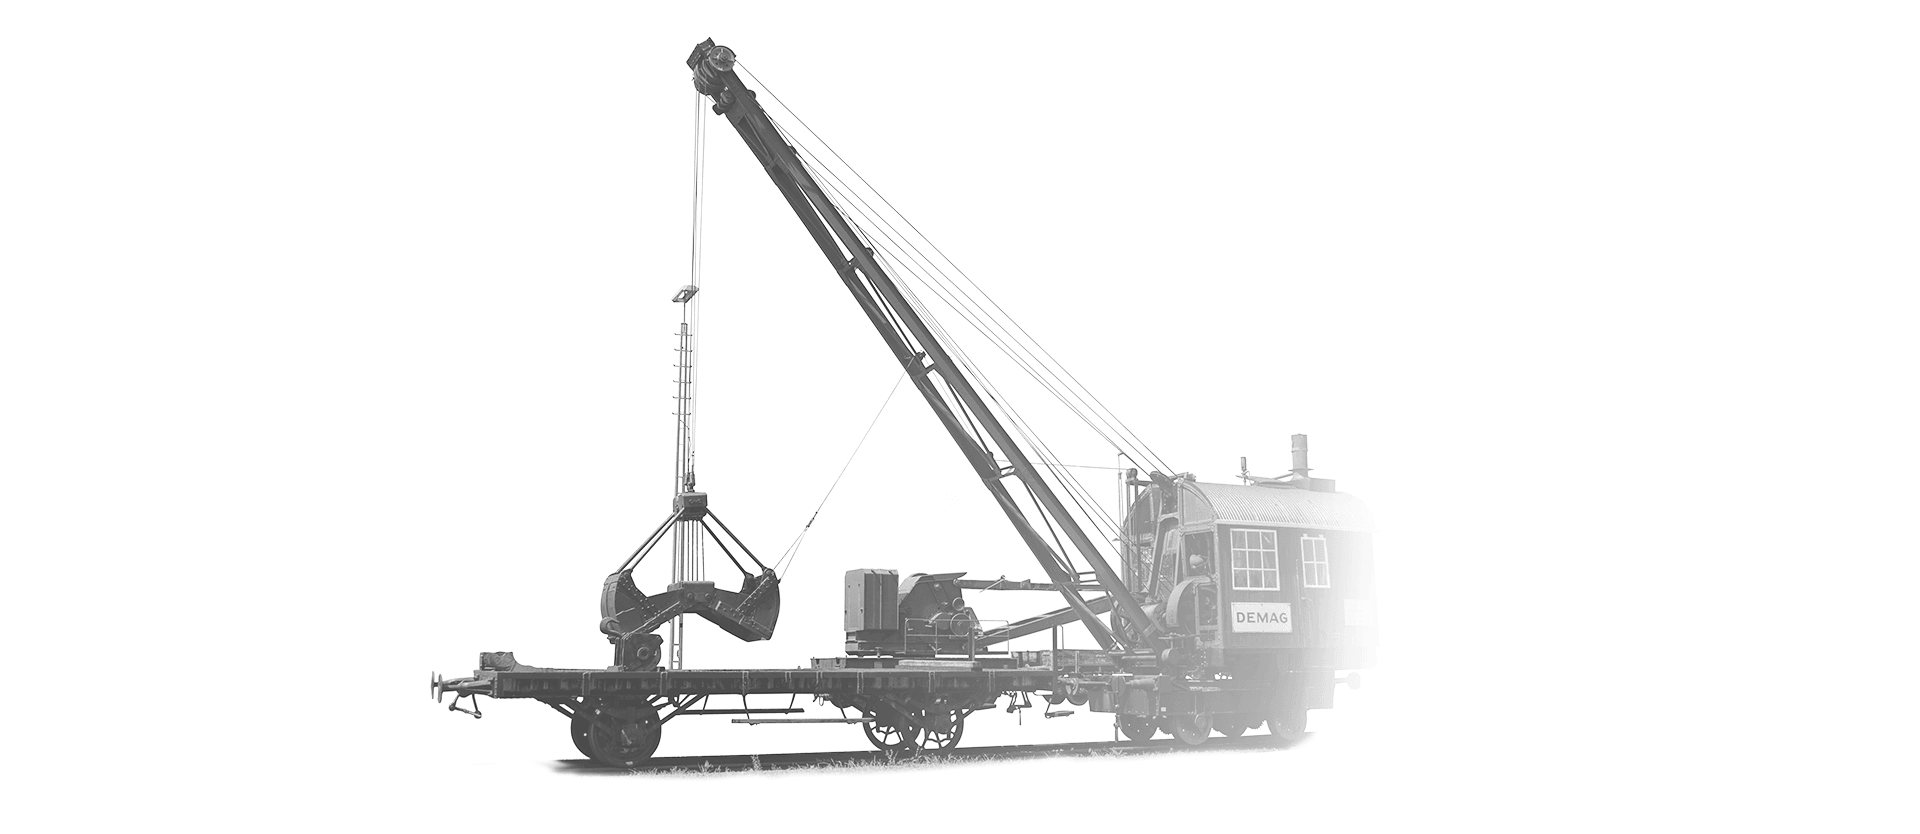 A steam crane in black and white